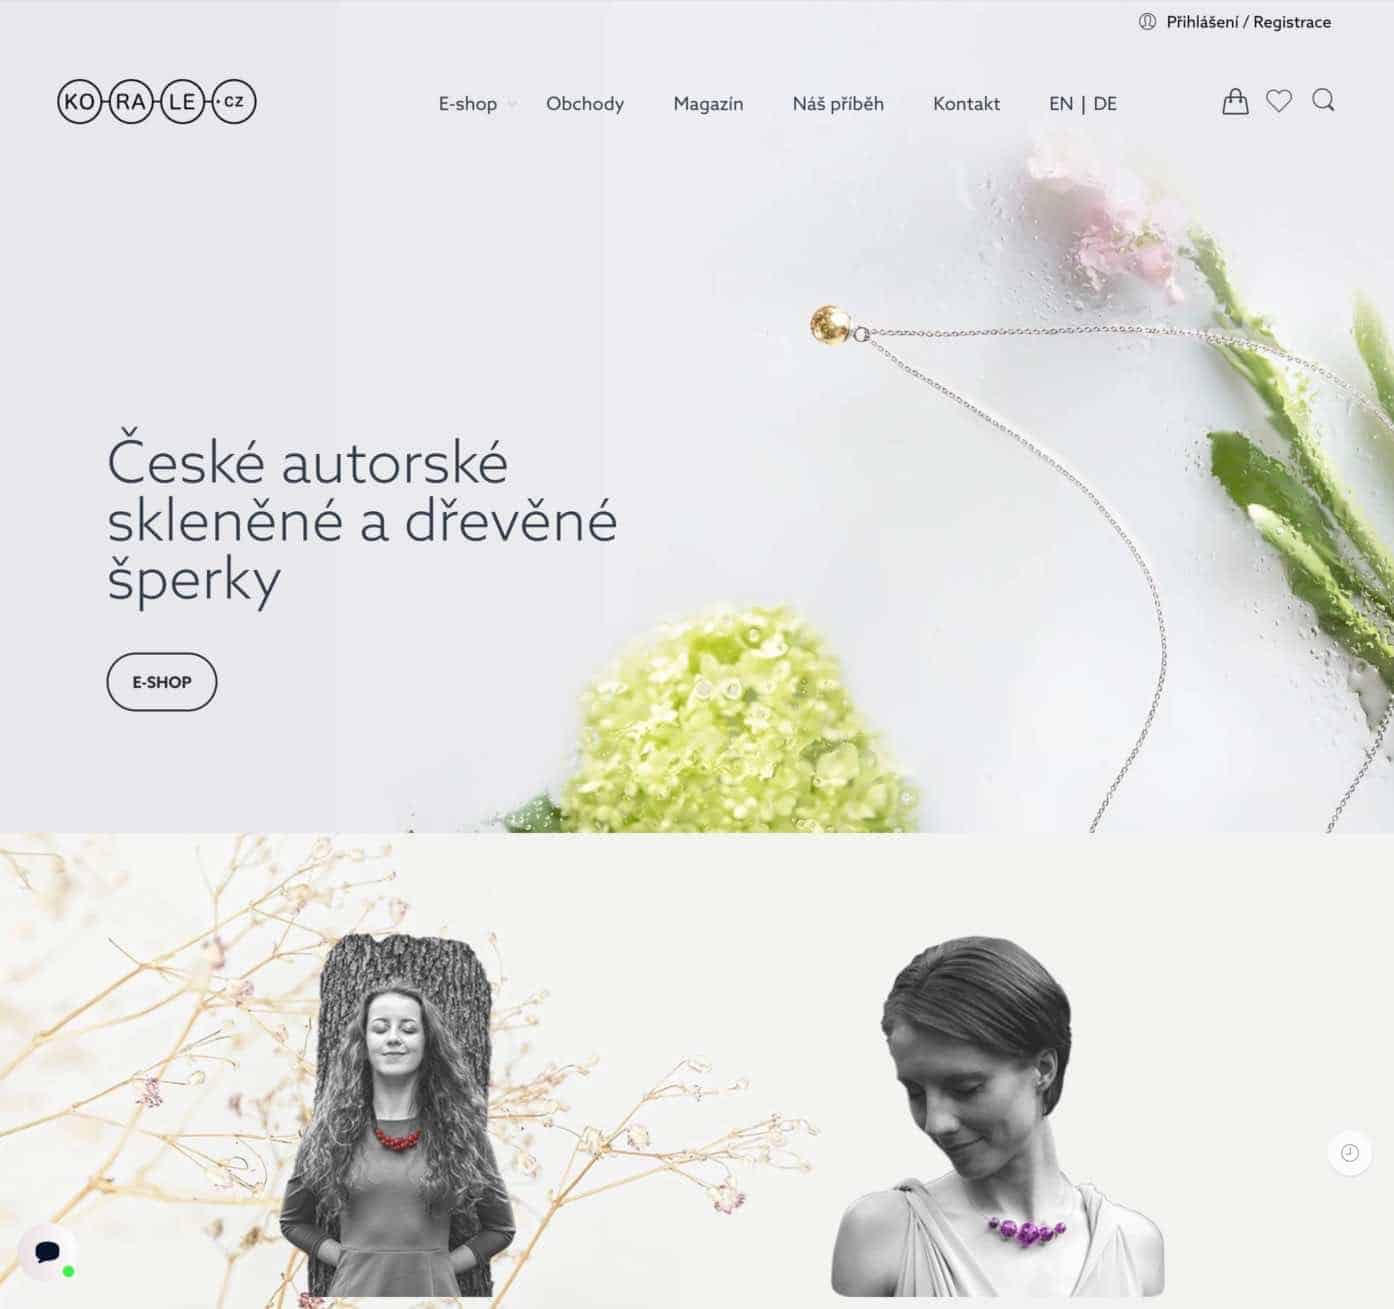 ko-ra-le.cz website